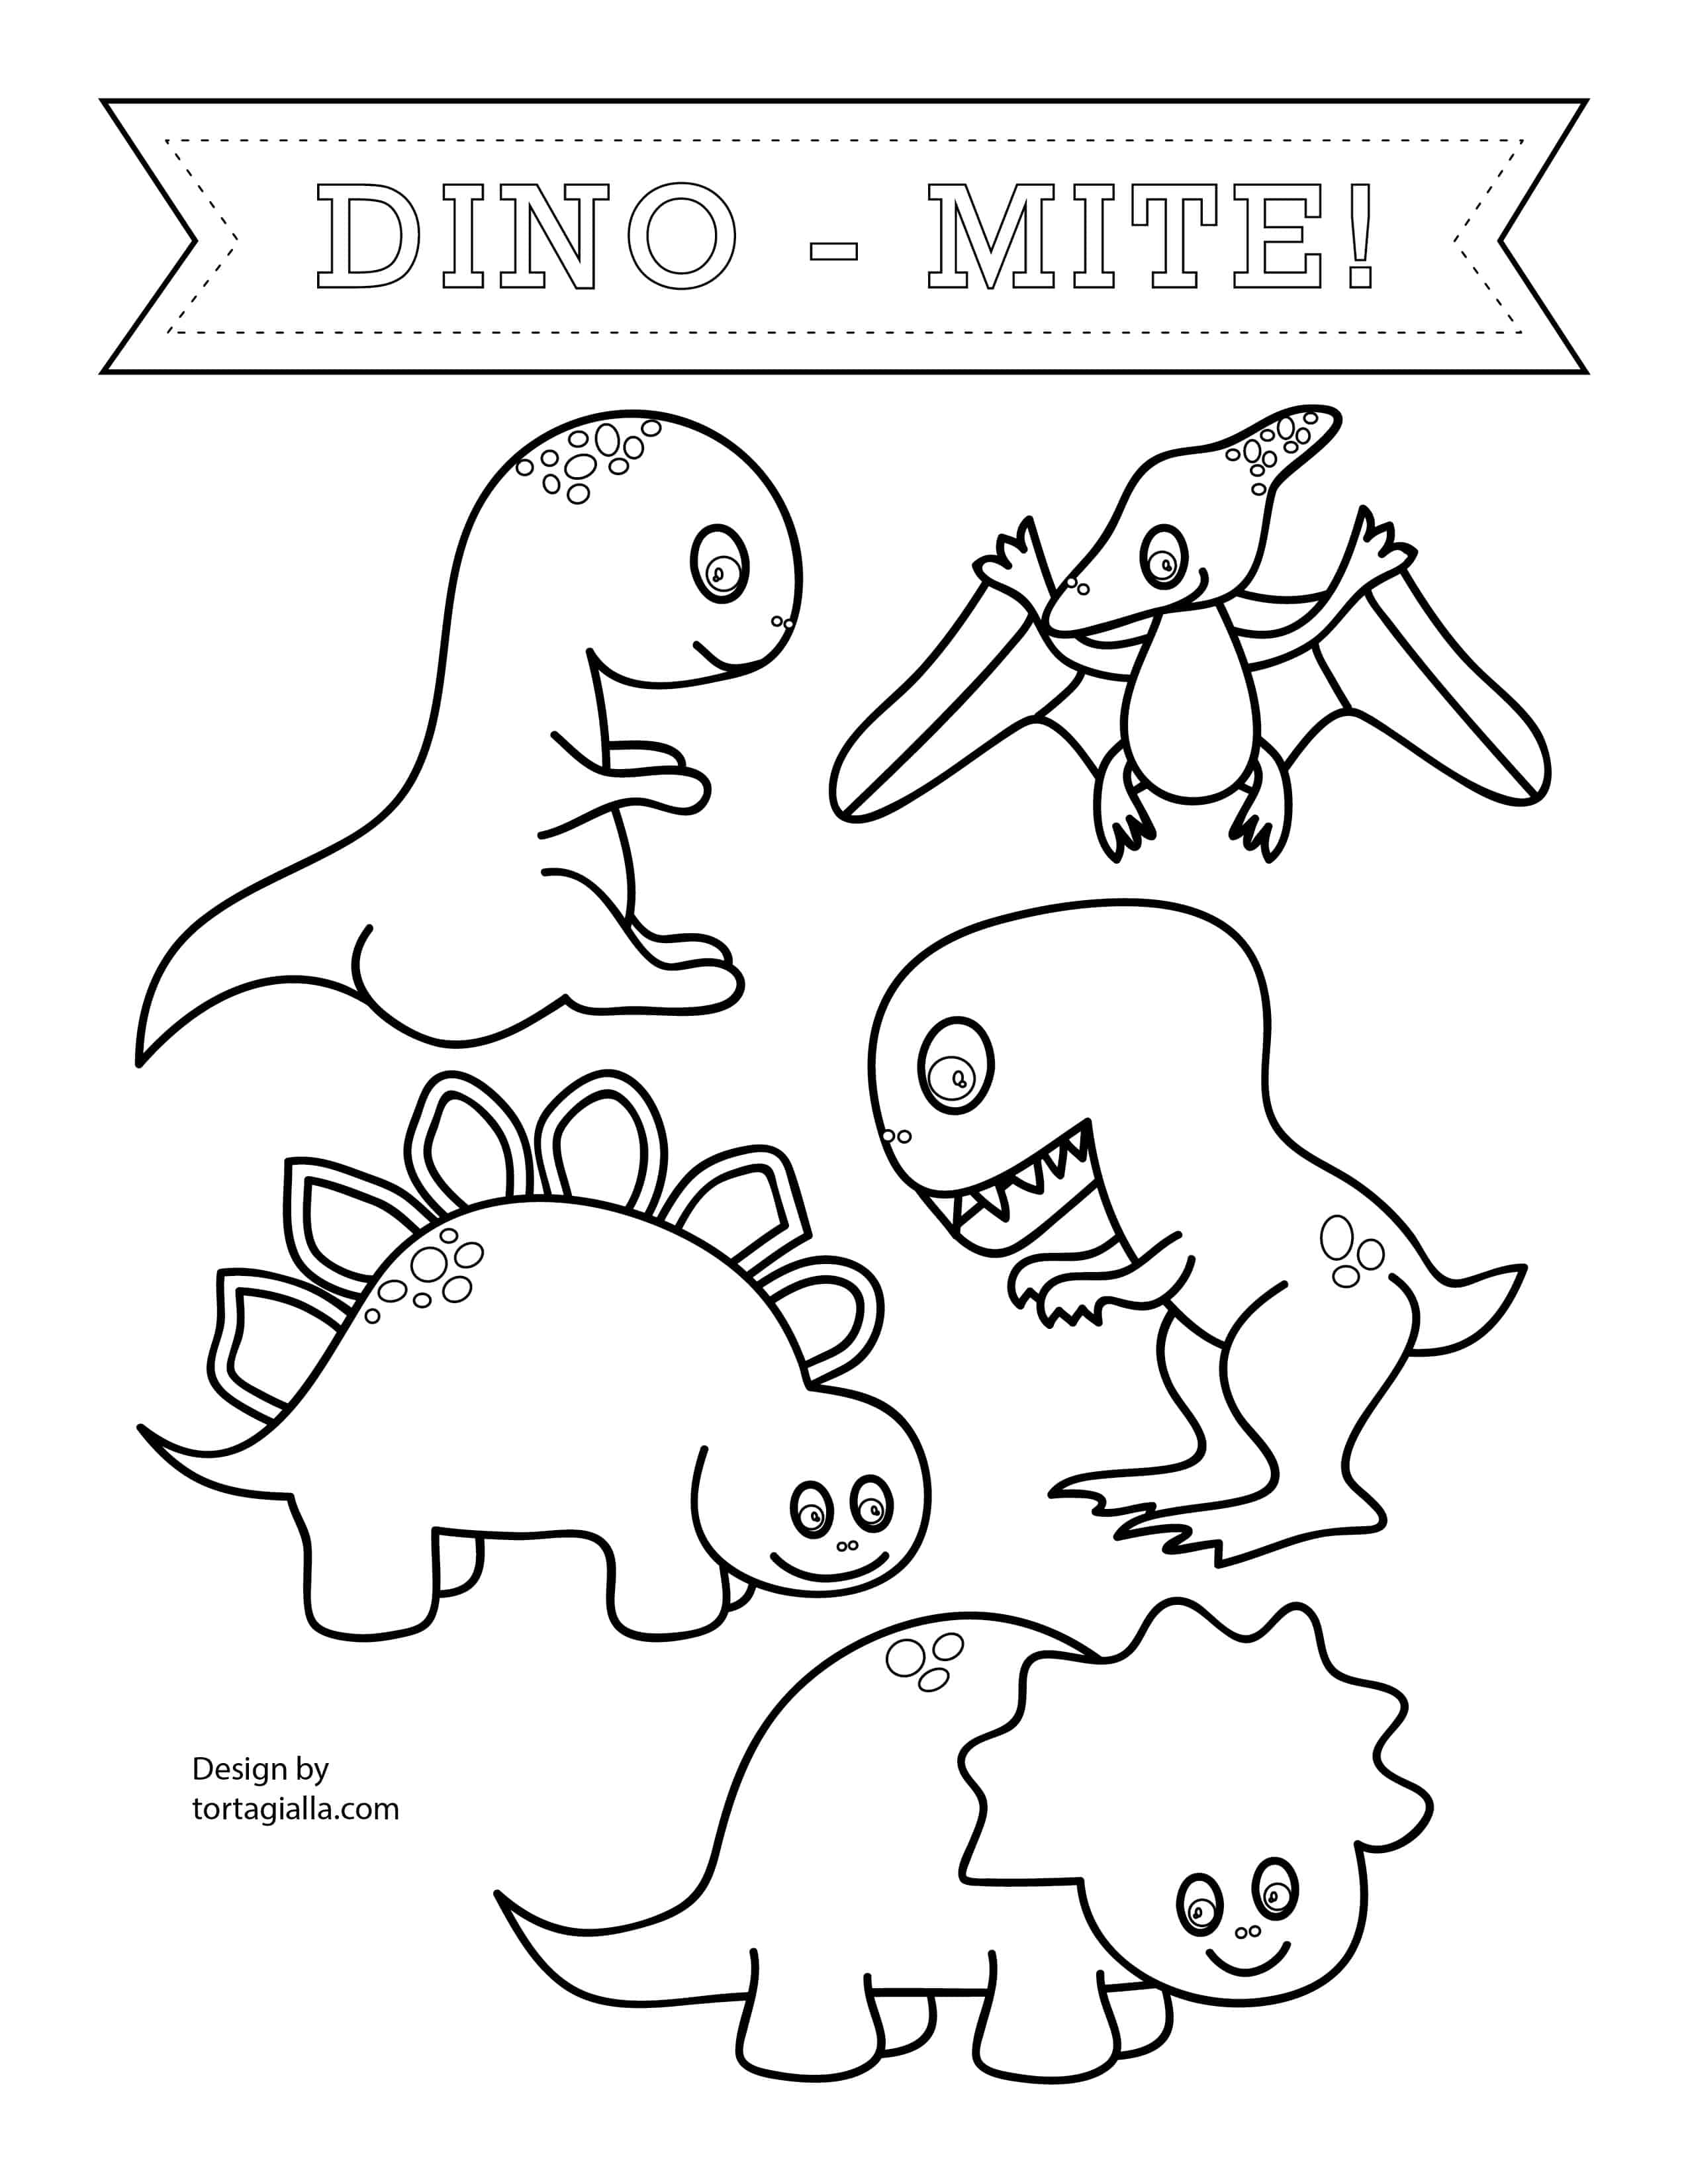 Free Printable Dinosaur Coloring Page | tortagialla